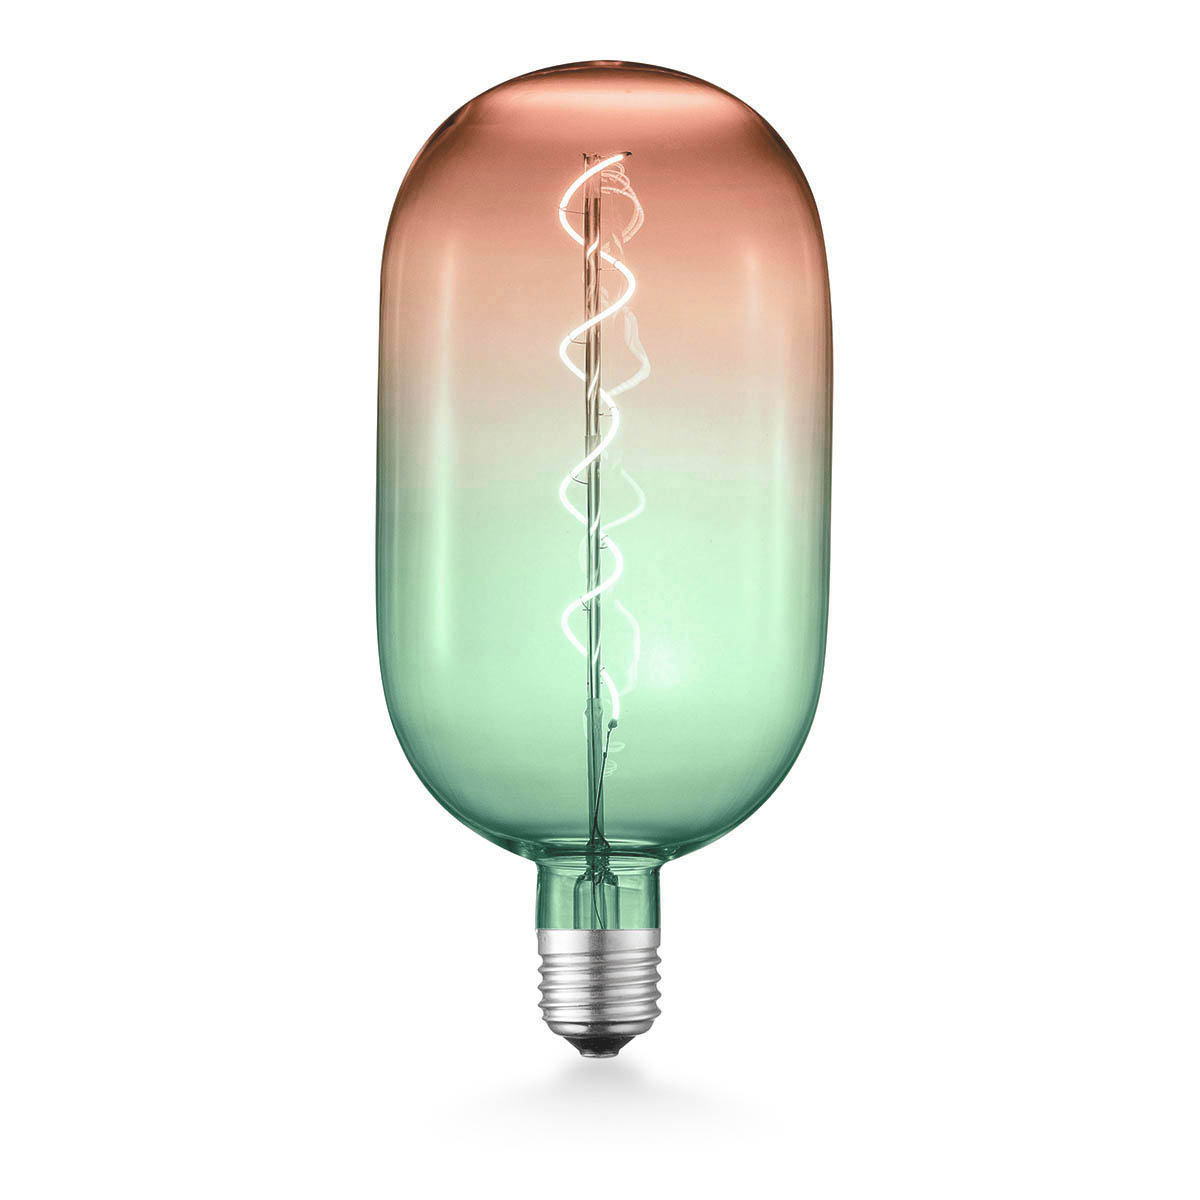 Tangla lighting - TLB-9001-04H - LED Light Bulb Single Spiral filament - 4W gradient color bulb - medium - red - dimmable - E27